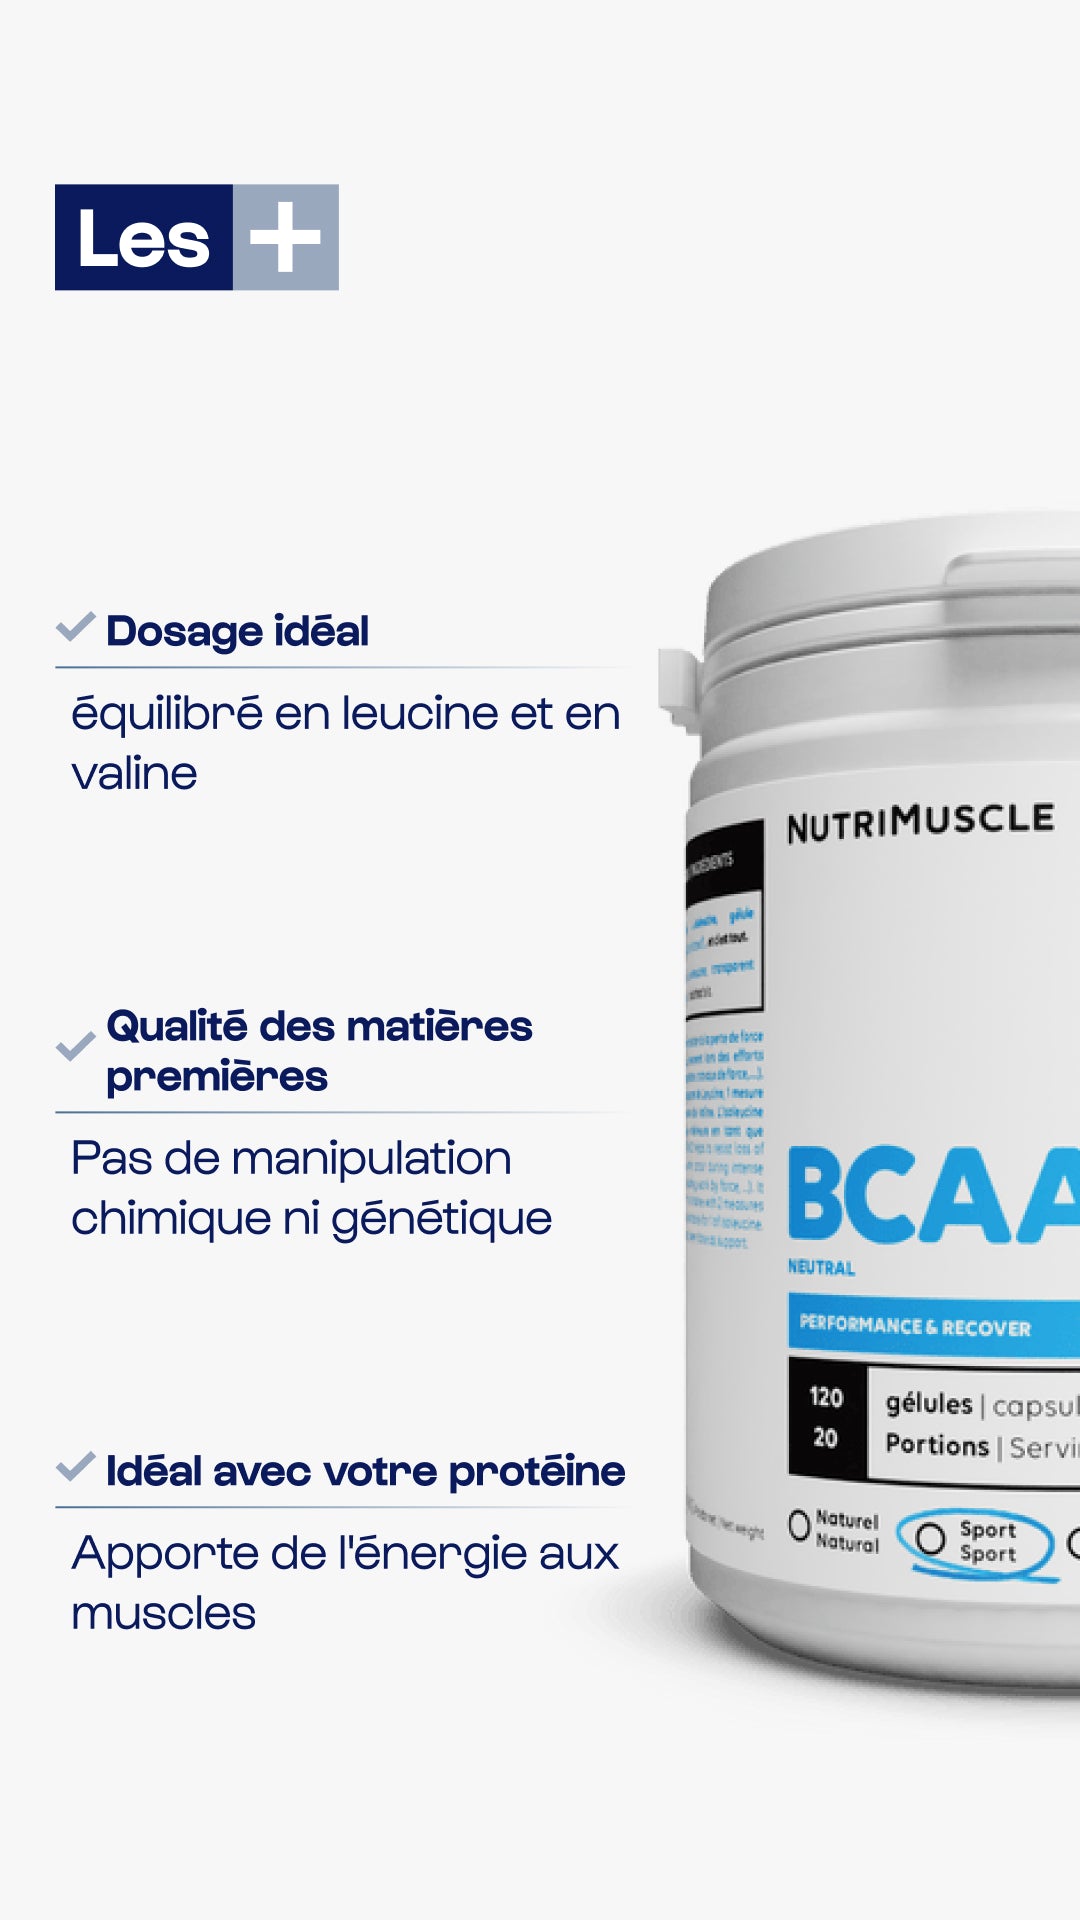 BCAA 2.1.2 Powder resistance